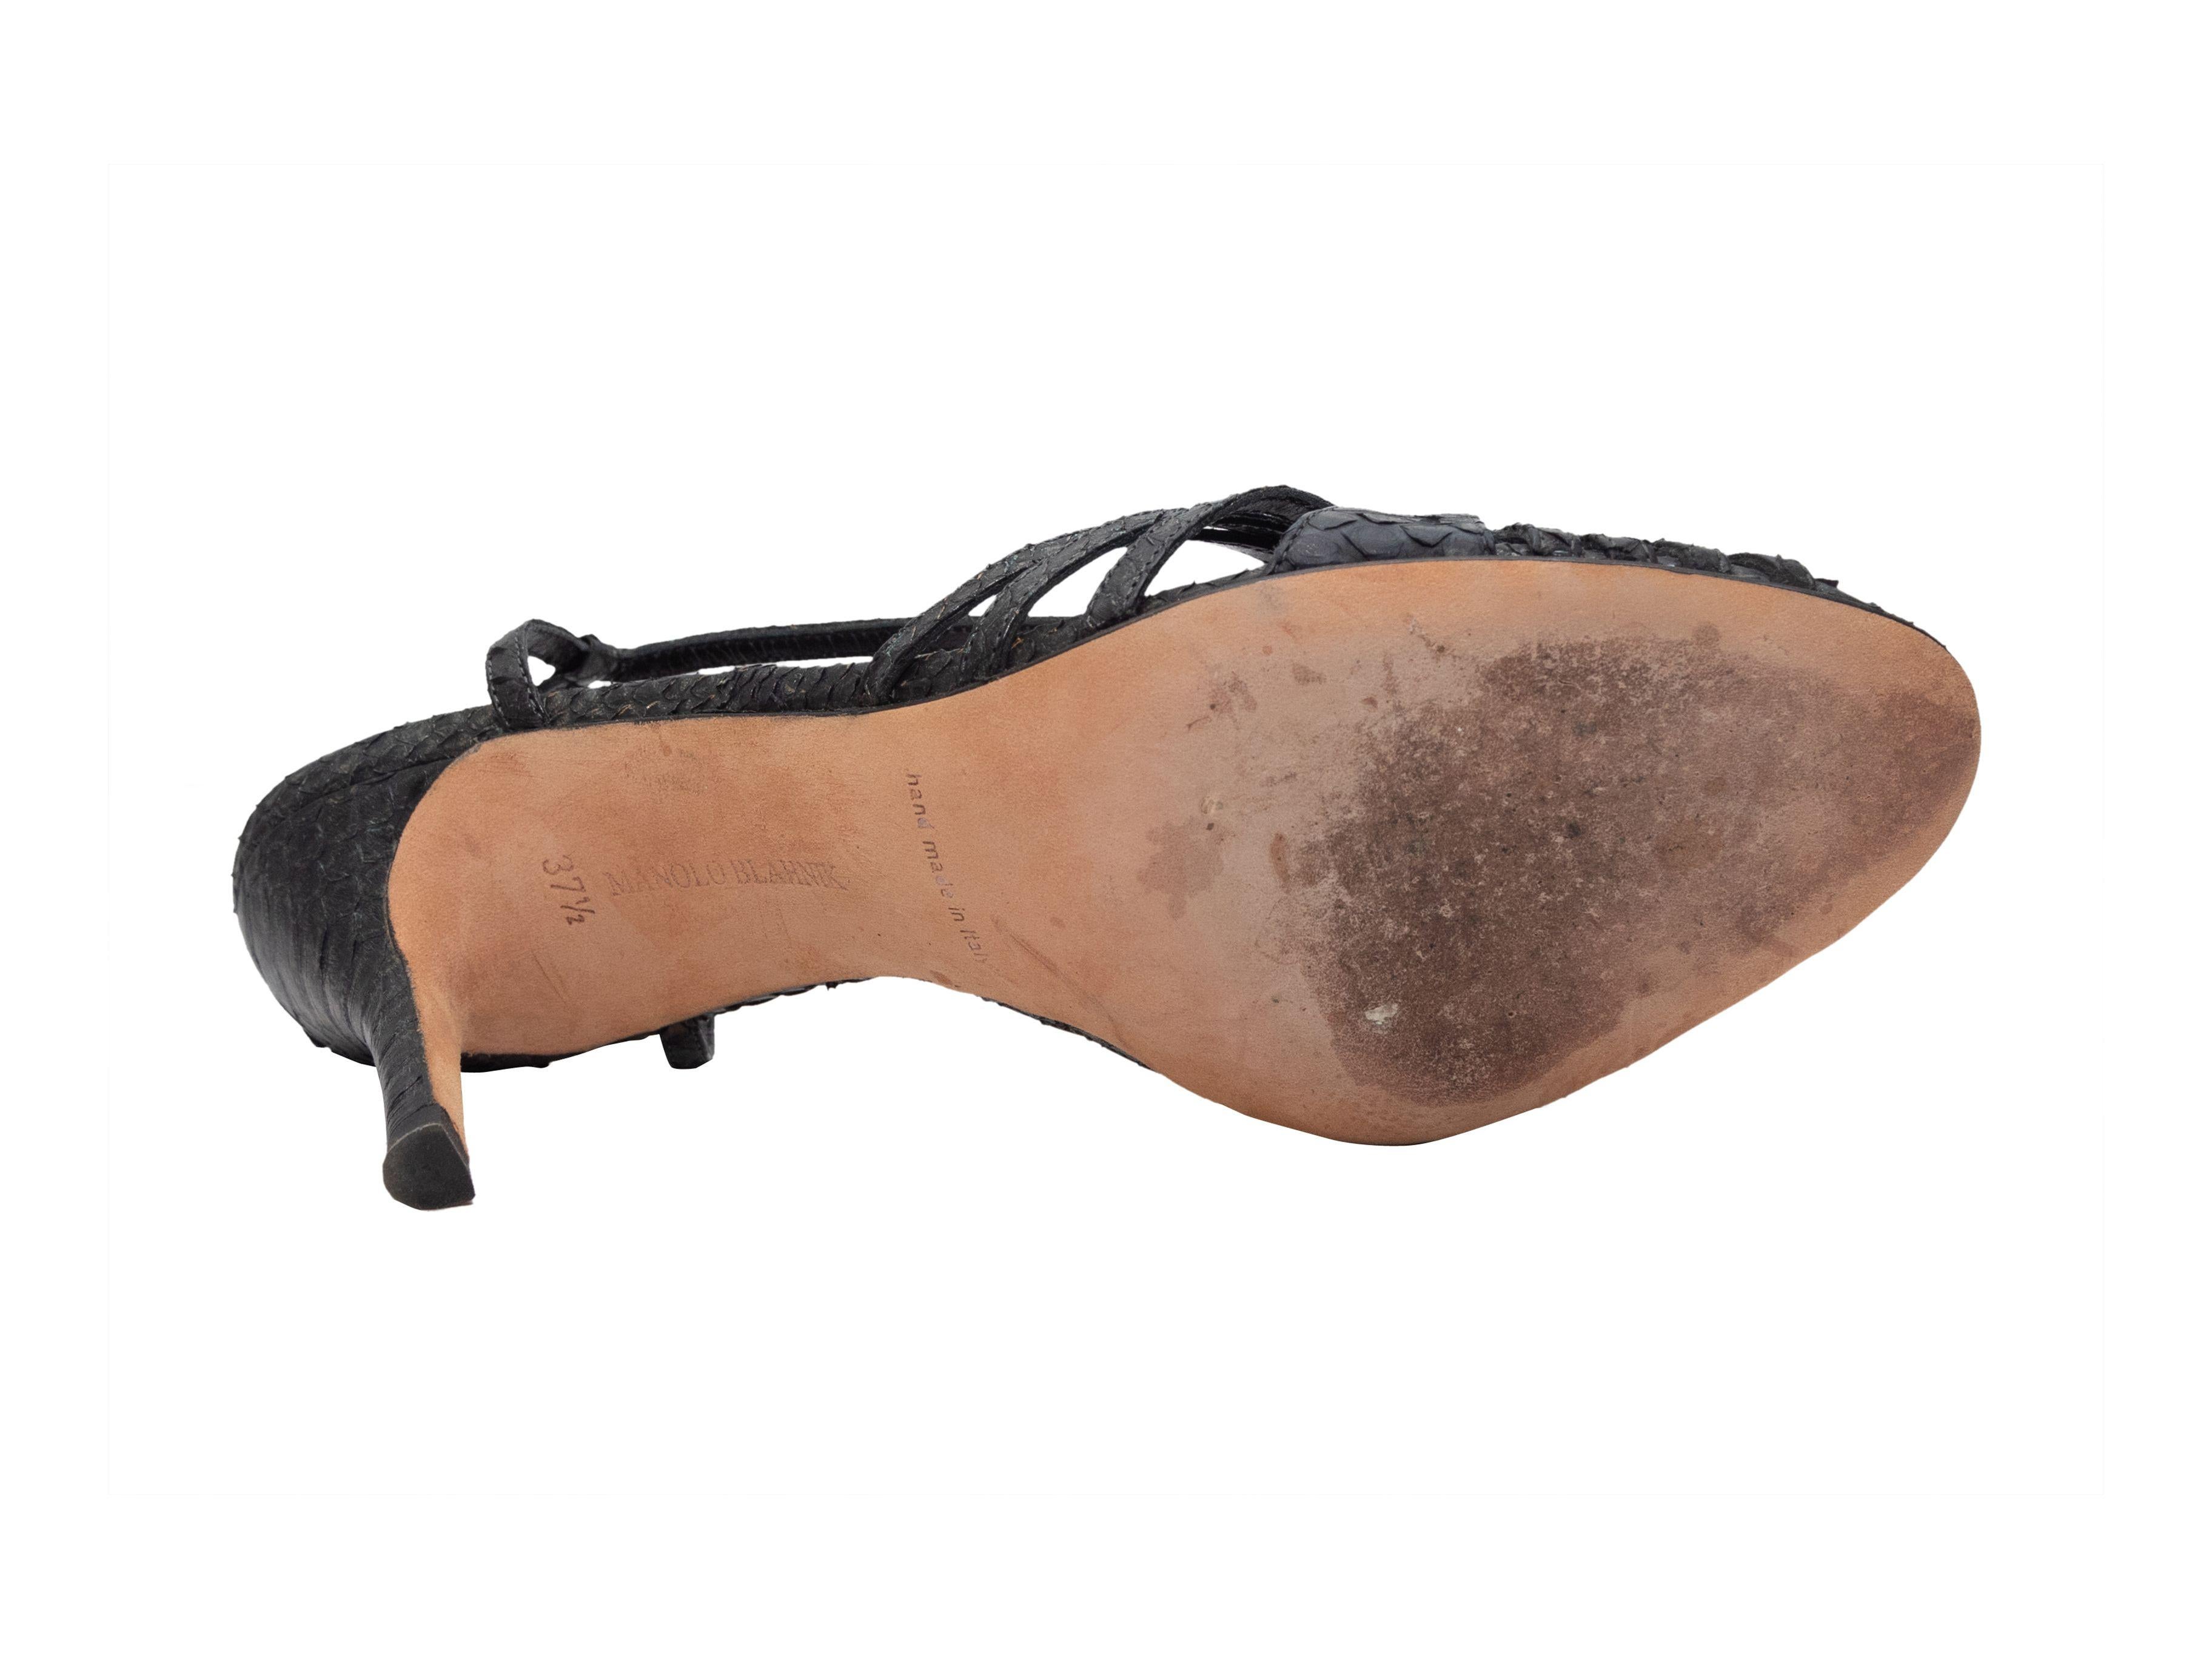 Product Details: Black snakeskin slingback sandals by Manolo Blahnik. Silver-tone buckle closures at slingback straps. 3